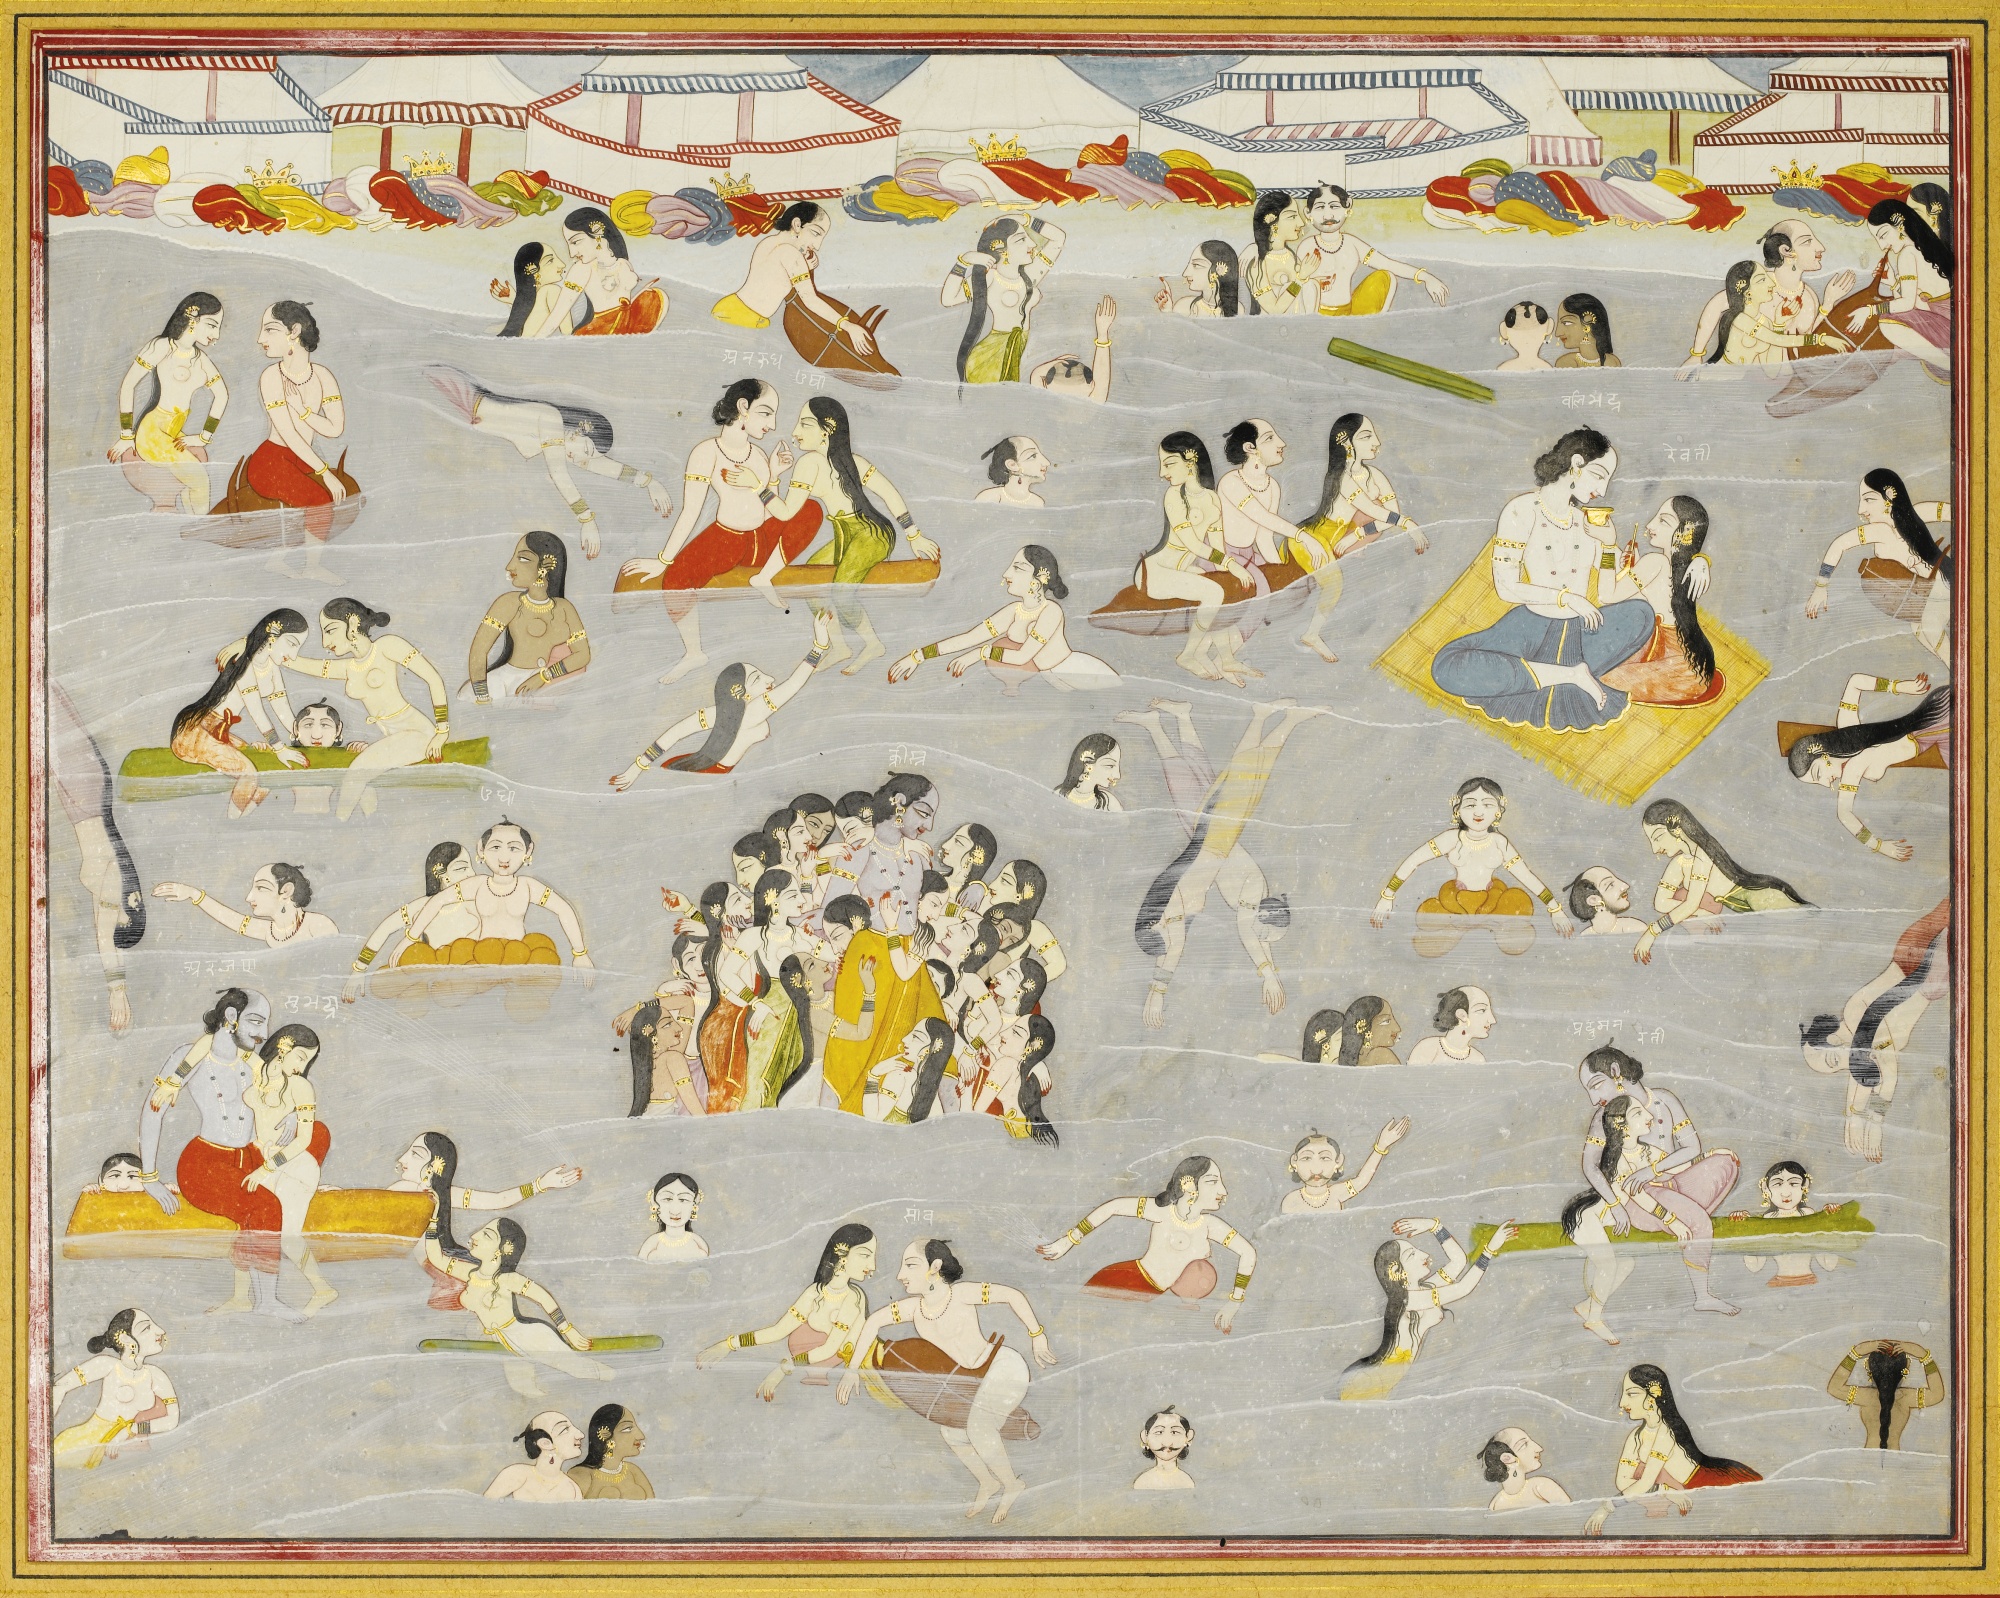 Krishna and the Gopis Bathing in the River Yamuna, Illustration from a Harivamsa series, attributable to Purkhu - Kangra Painting, circa 1800-15